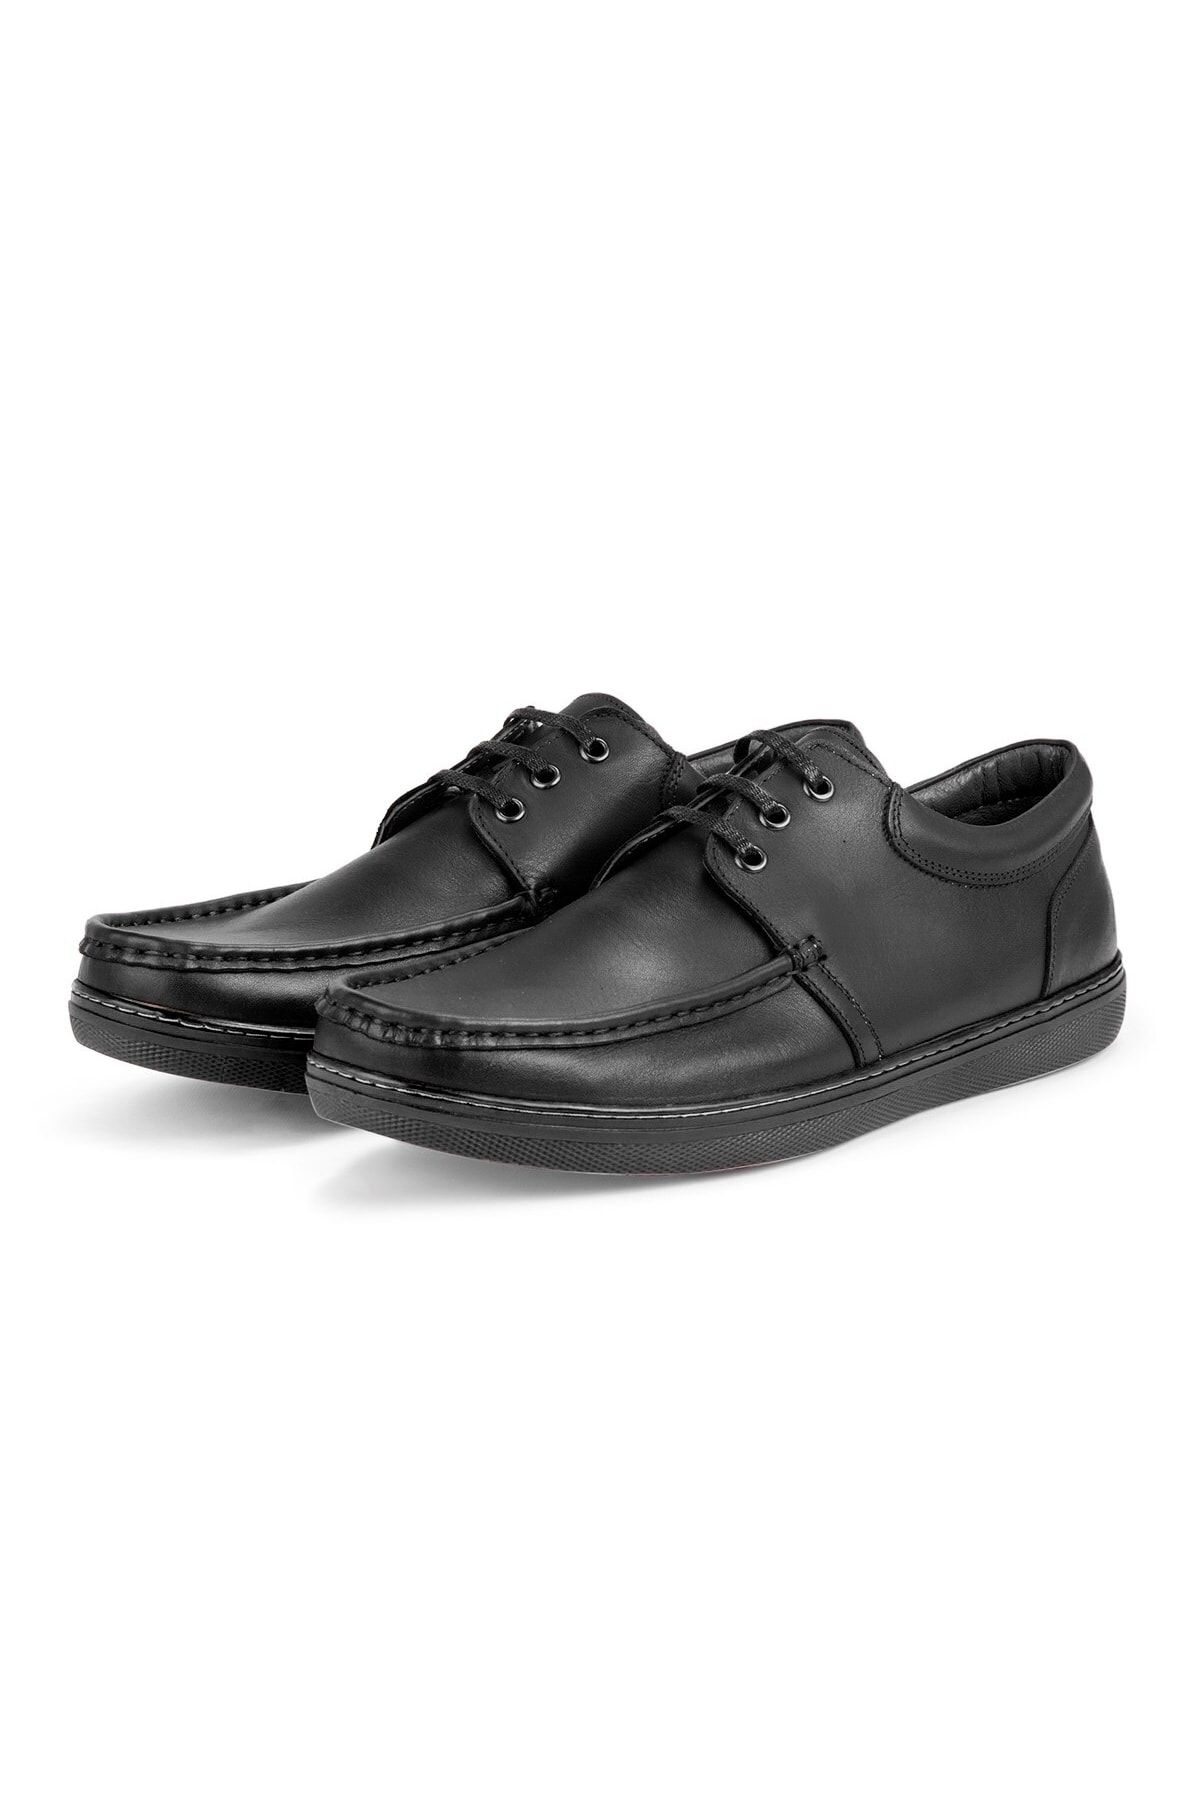 Levně Ducavelli Jazzy Genuine Leather Men's Casual Shoes Black